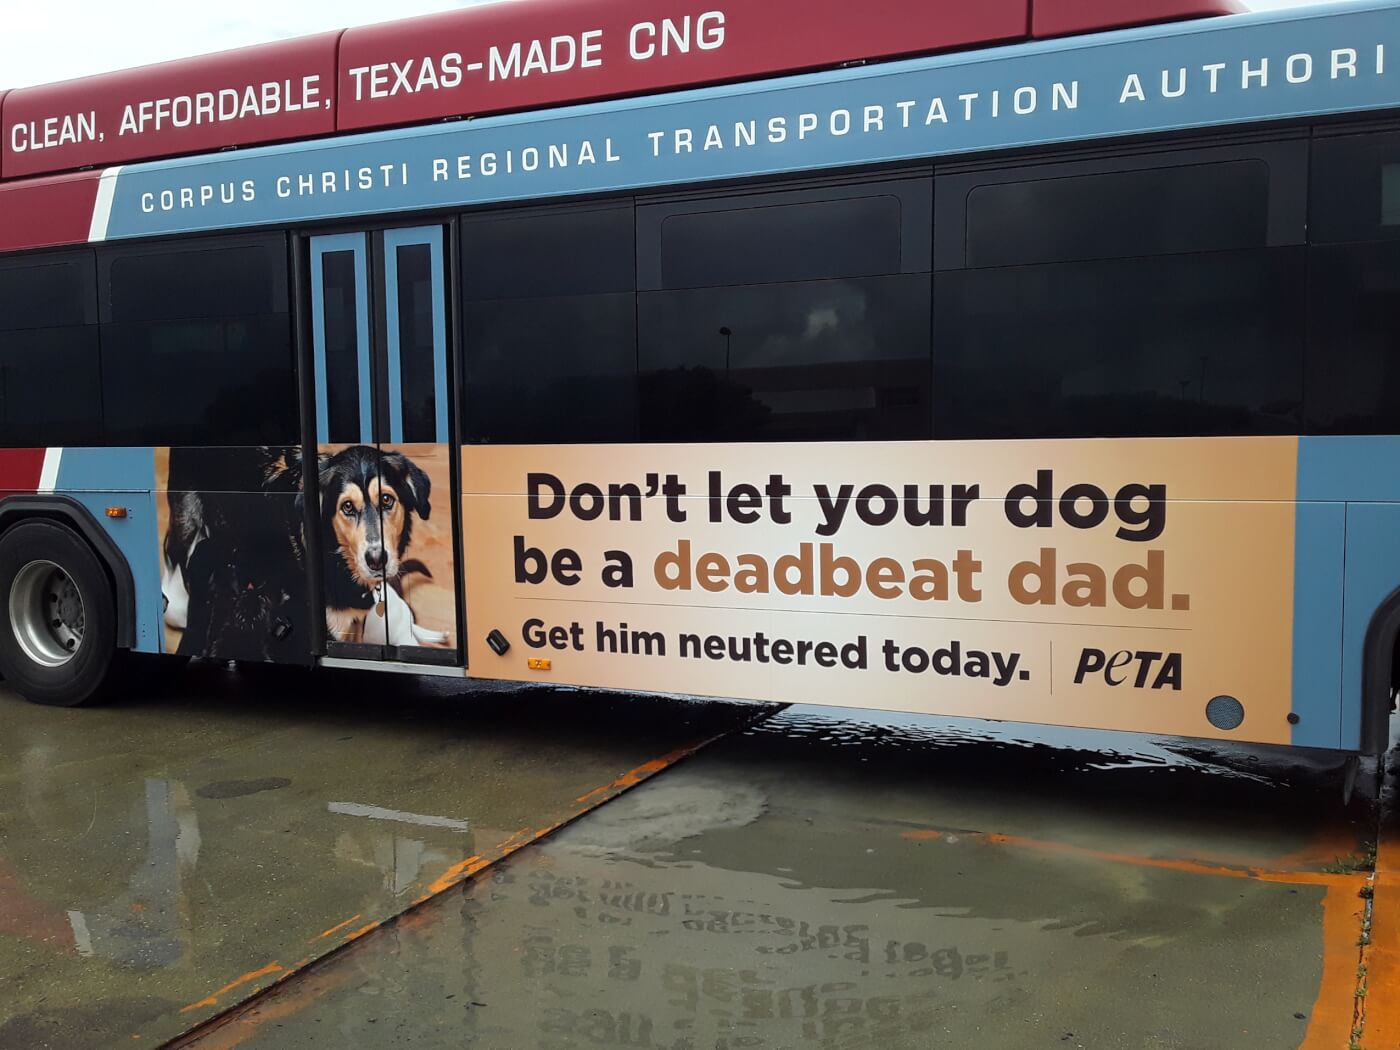 Deadbeat Dad PETA dog ads hit Corpus Christi